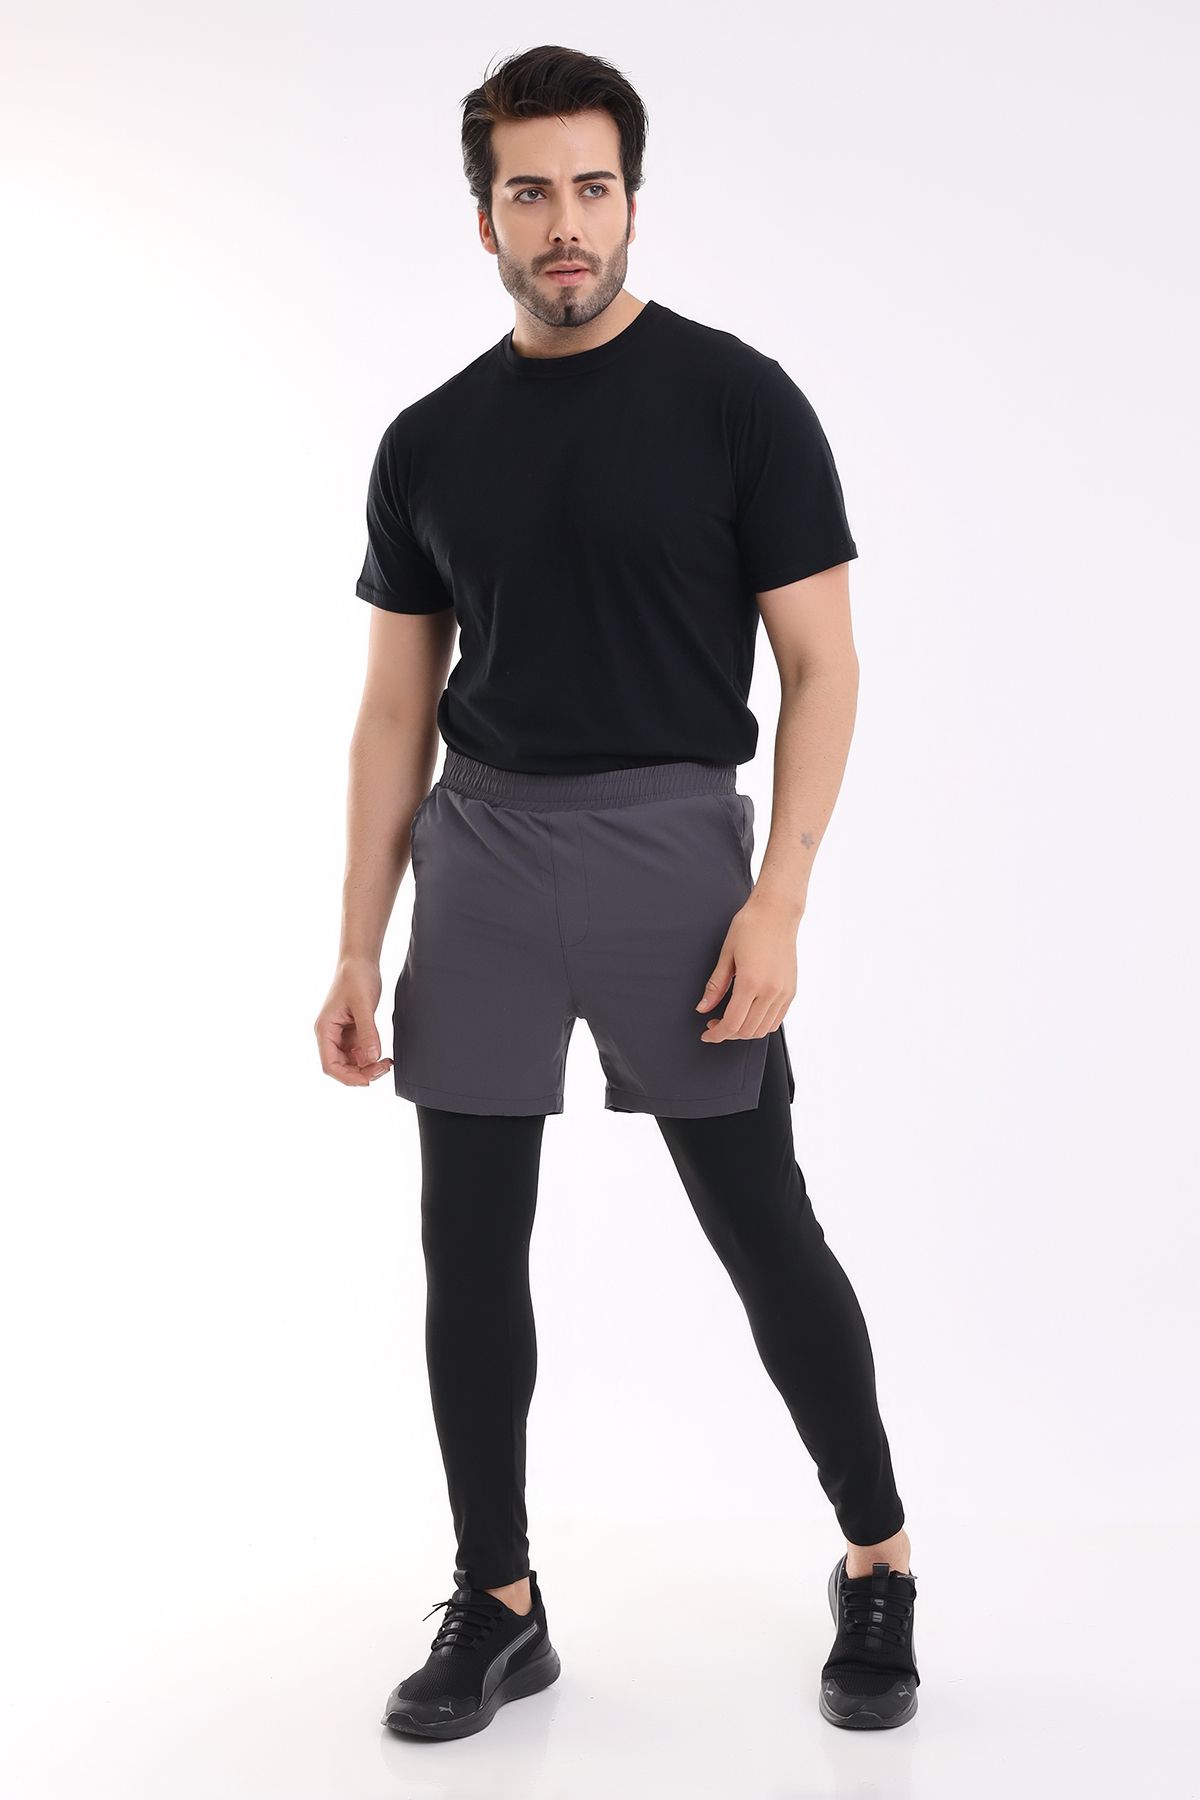 Men Wearing Tights Under Shorts: 2017